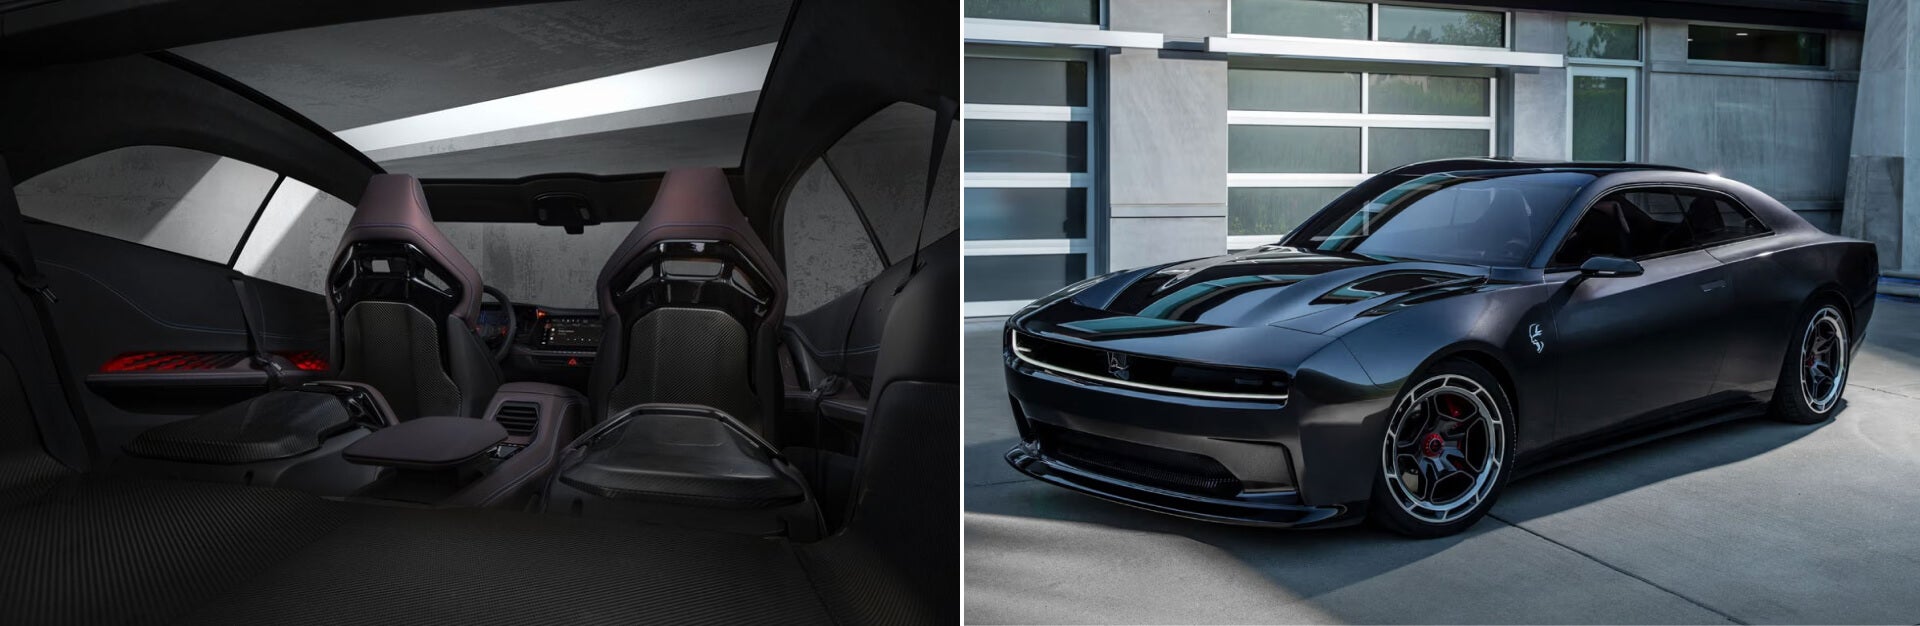 Electric Dodge Charger Interior & Exterior Design